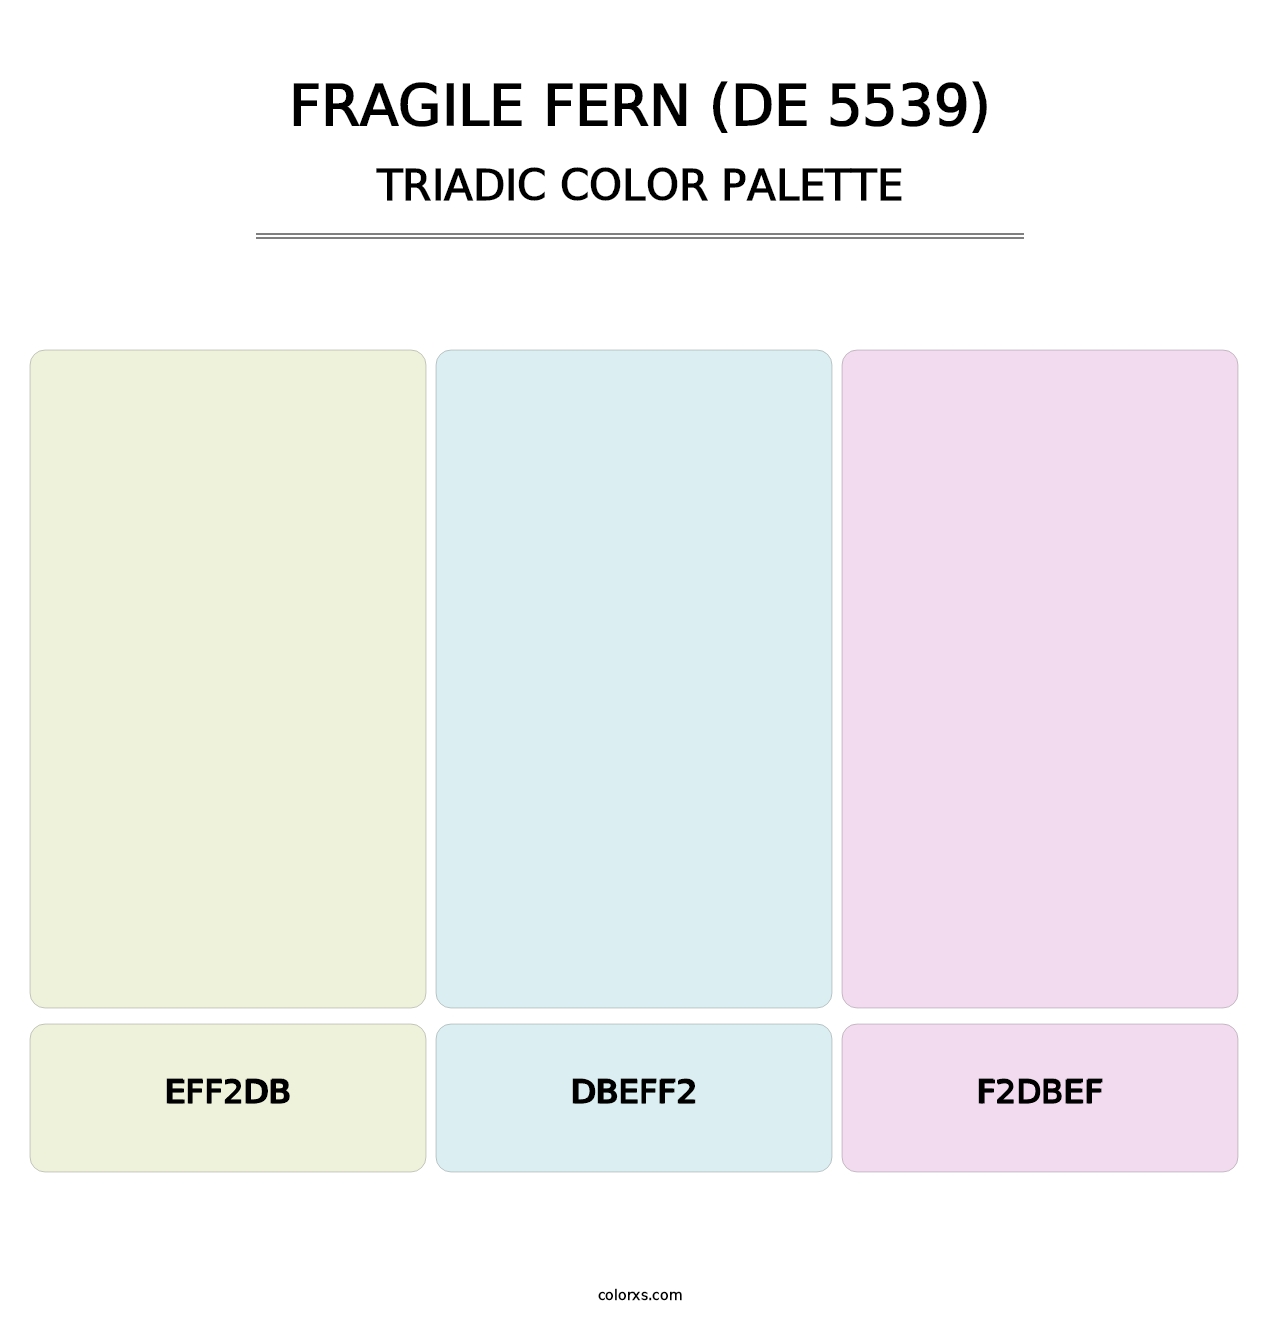 Fragile Fern (DE 5539) - Triadic Color Palette